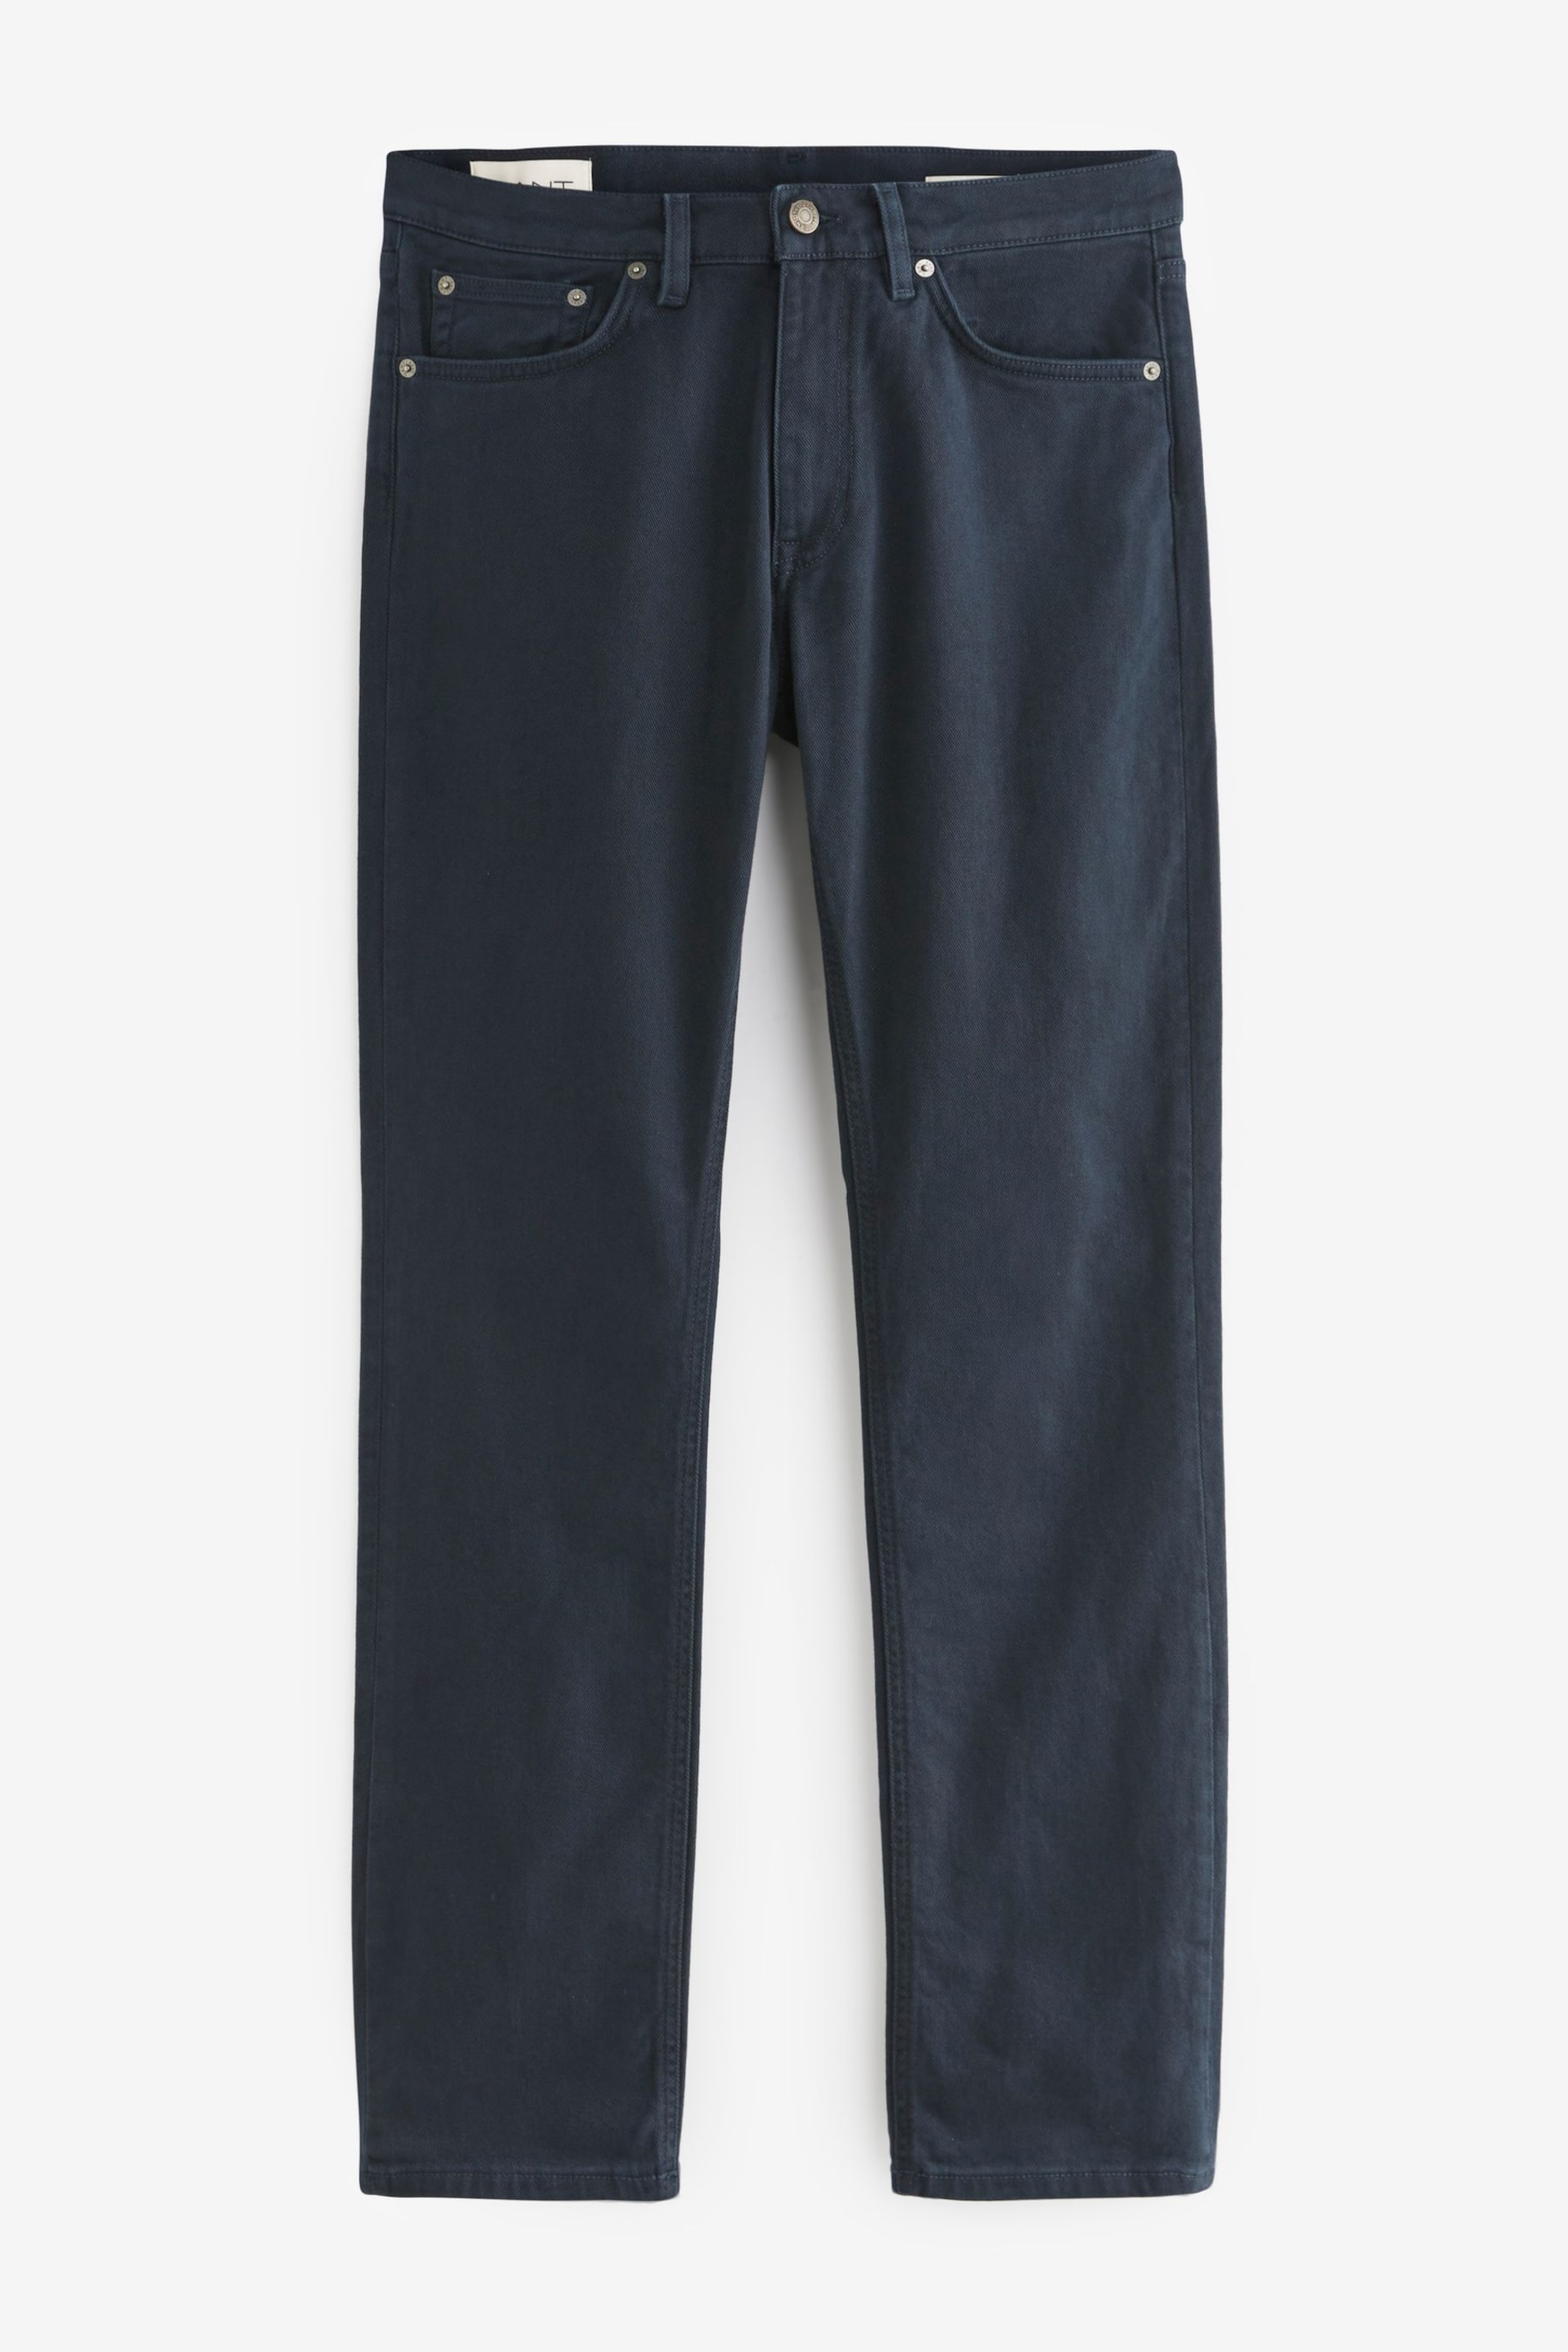 GANT Blue Regular Fit Soft Twill Jeans - Image 5 of 5